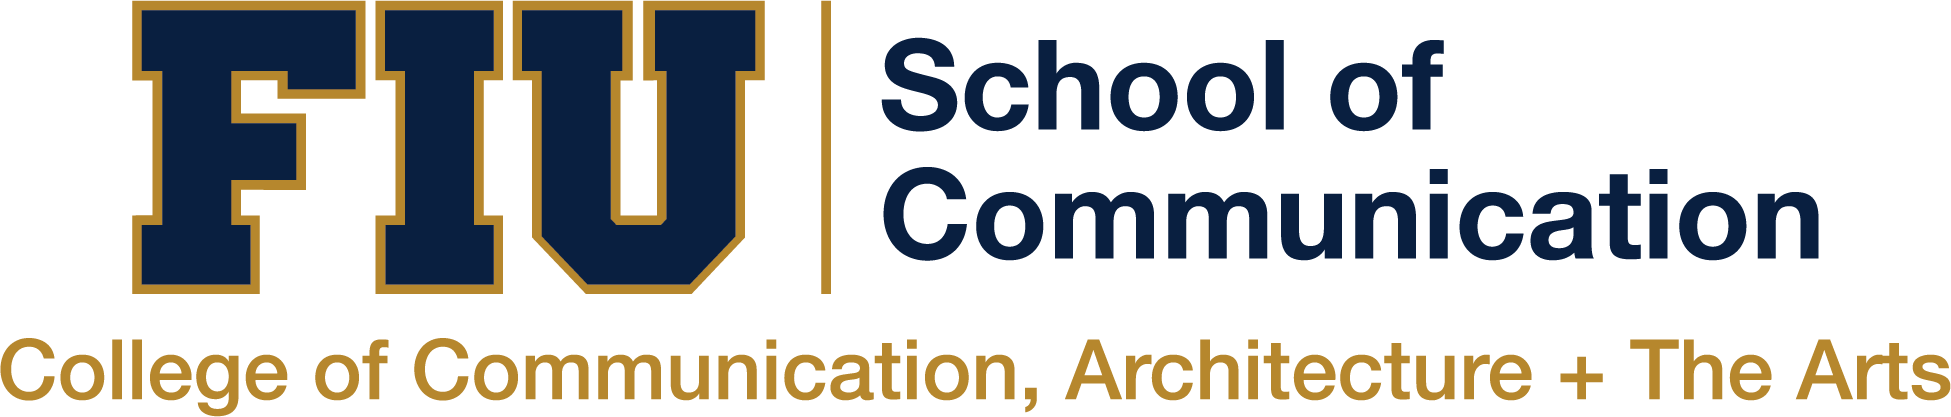 School of Communication Logo